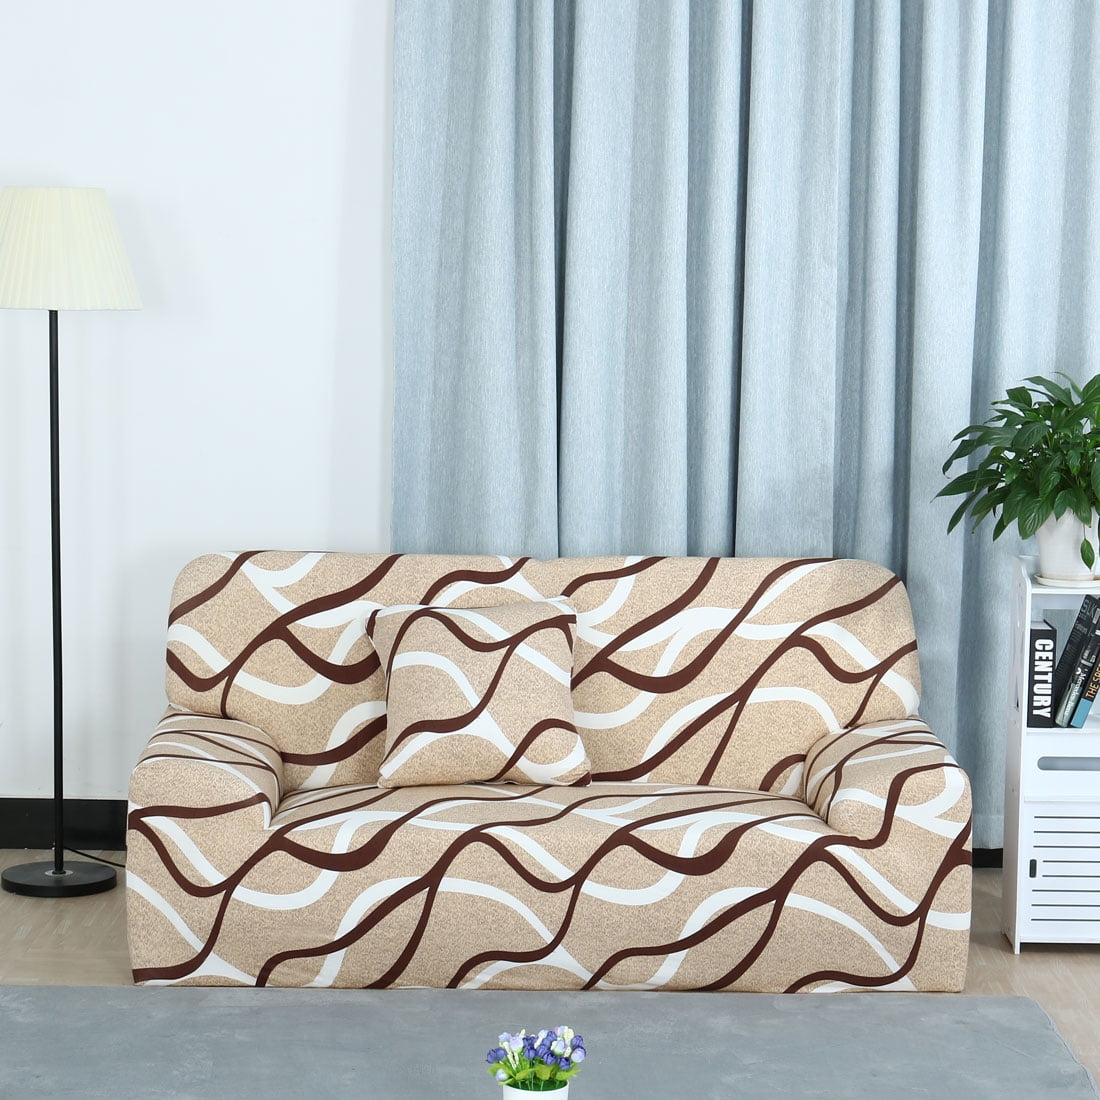 Details about   Sofa Cover Cotton Anti Slip Fresh Combination Cushion Stripe Room Sofa Cover 